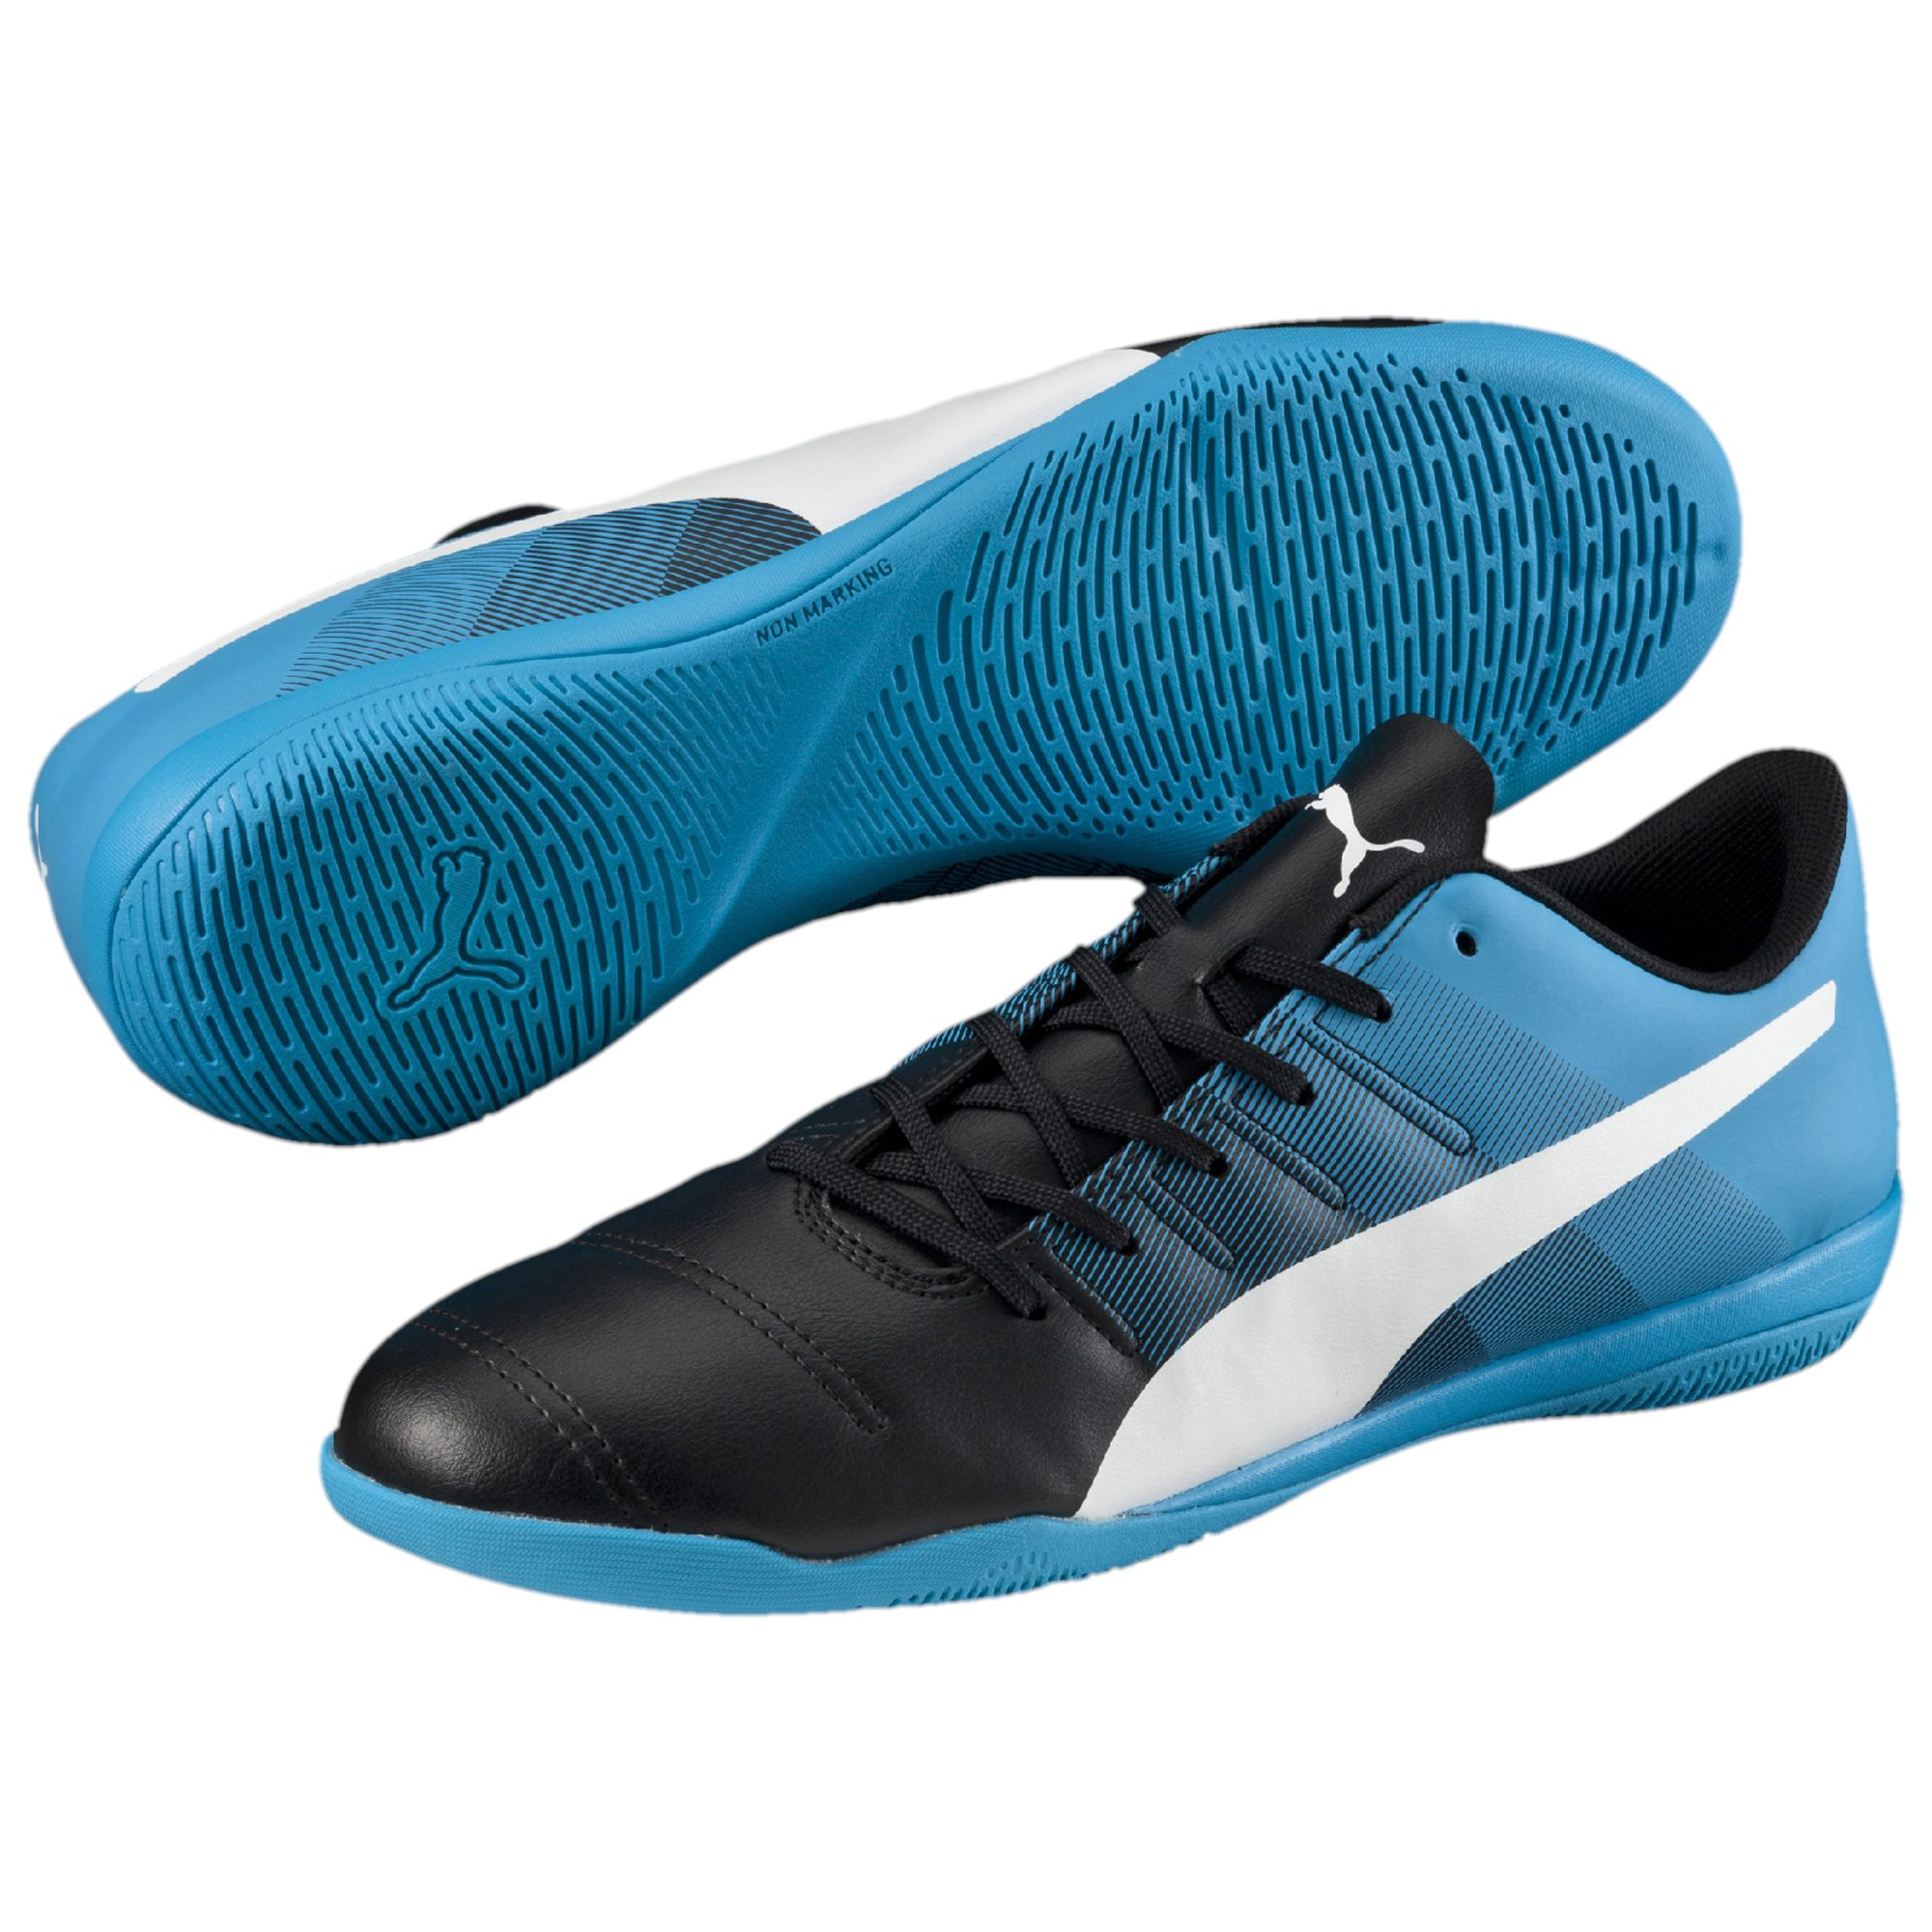 puma men's evopower 4 indoor soccer shoe